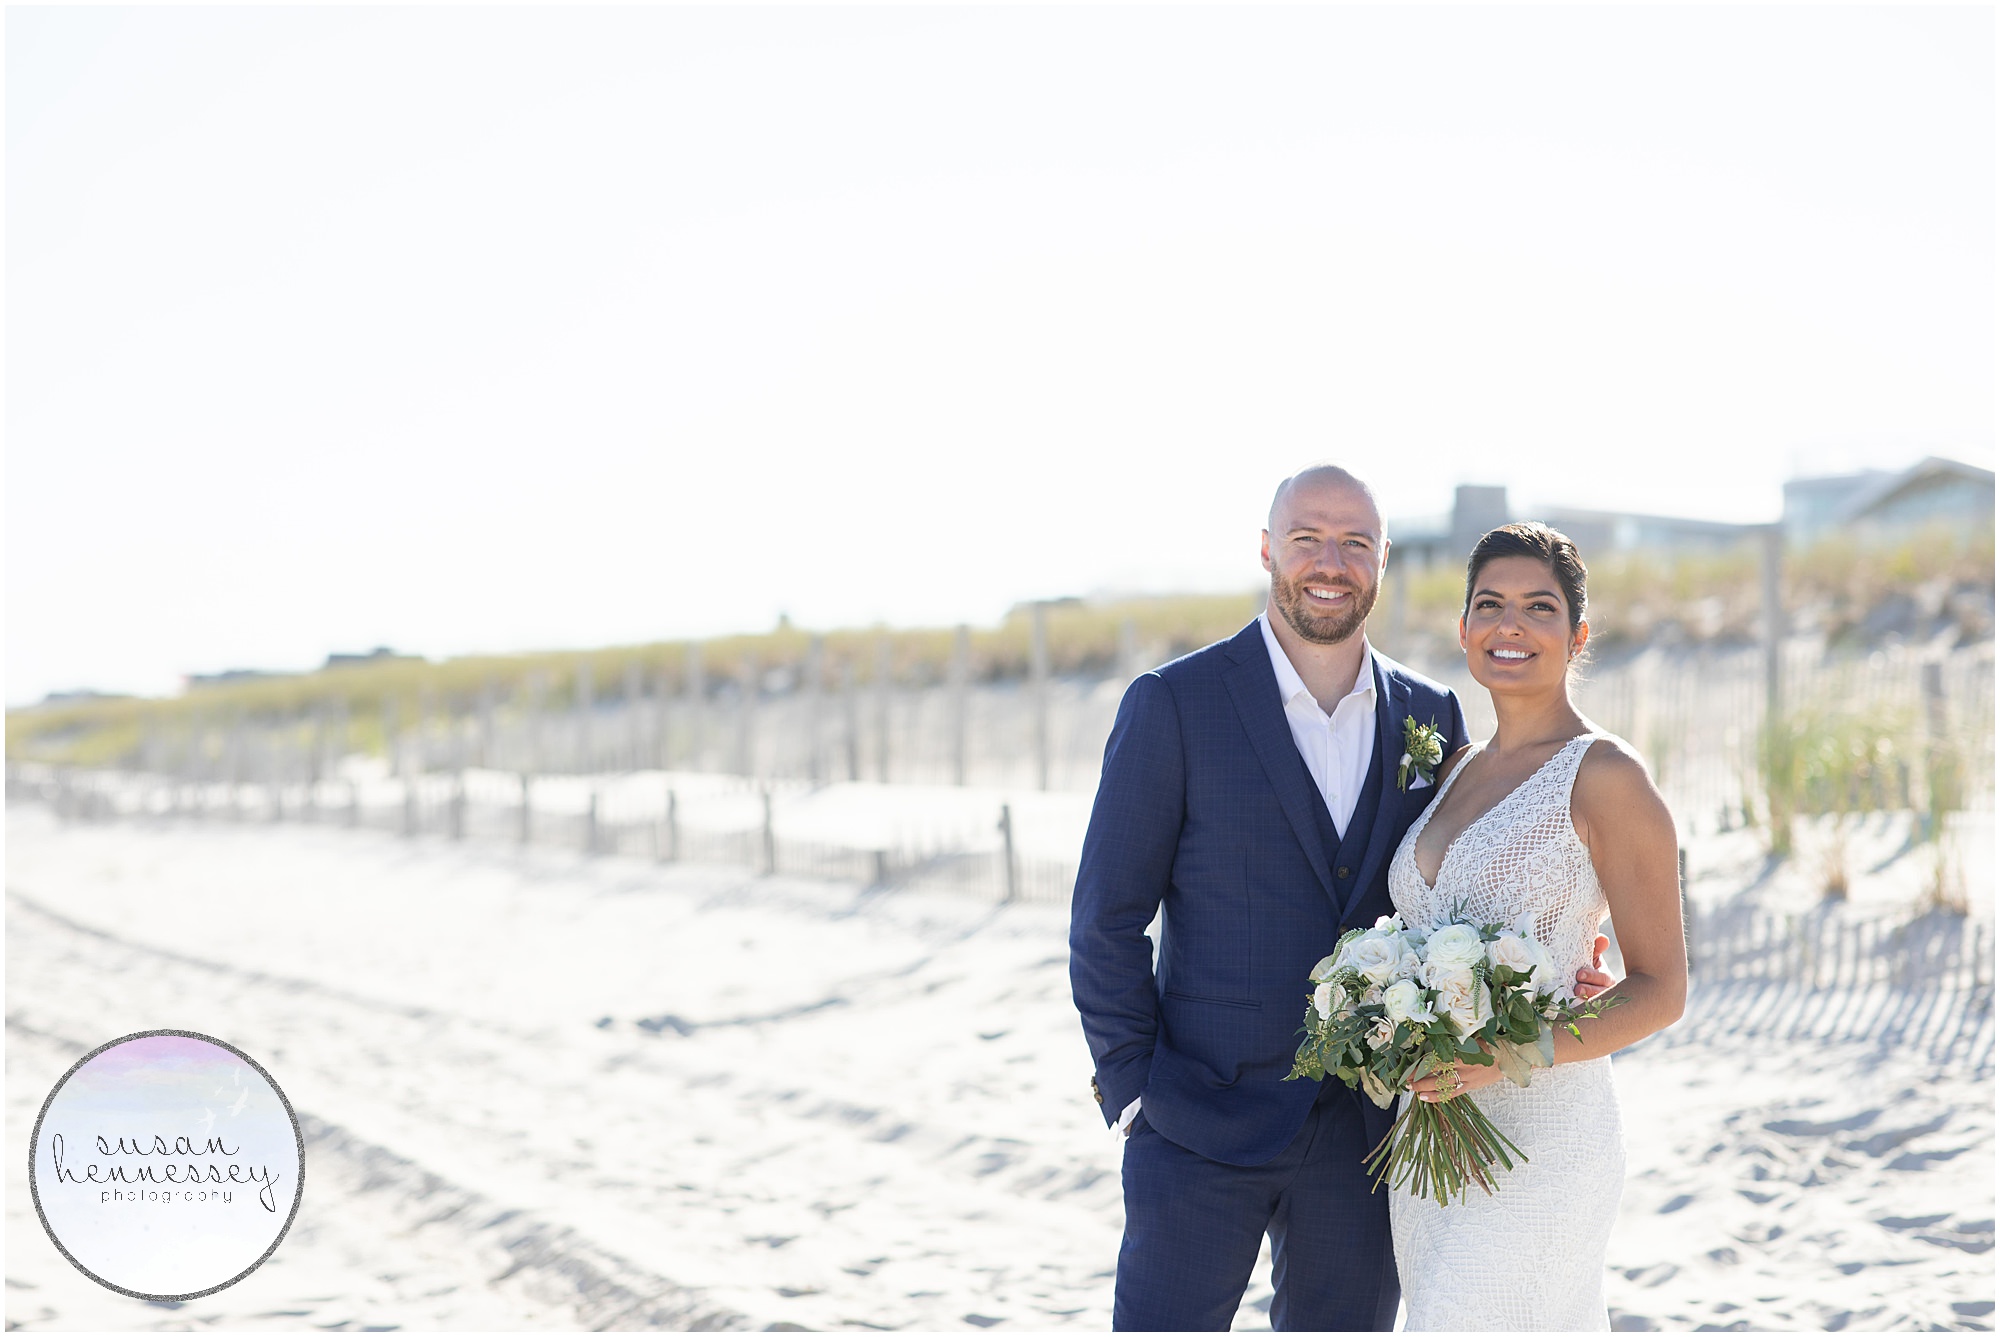 Beach portraits of bride and groom at Long Beach Island Microwedding